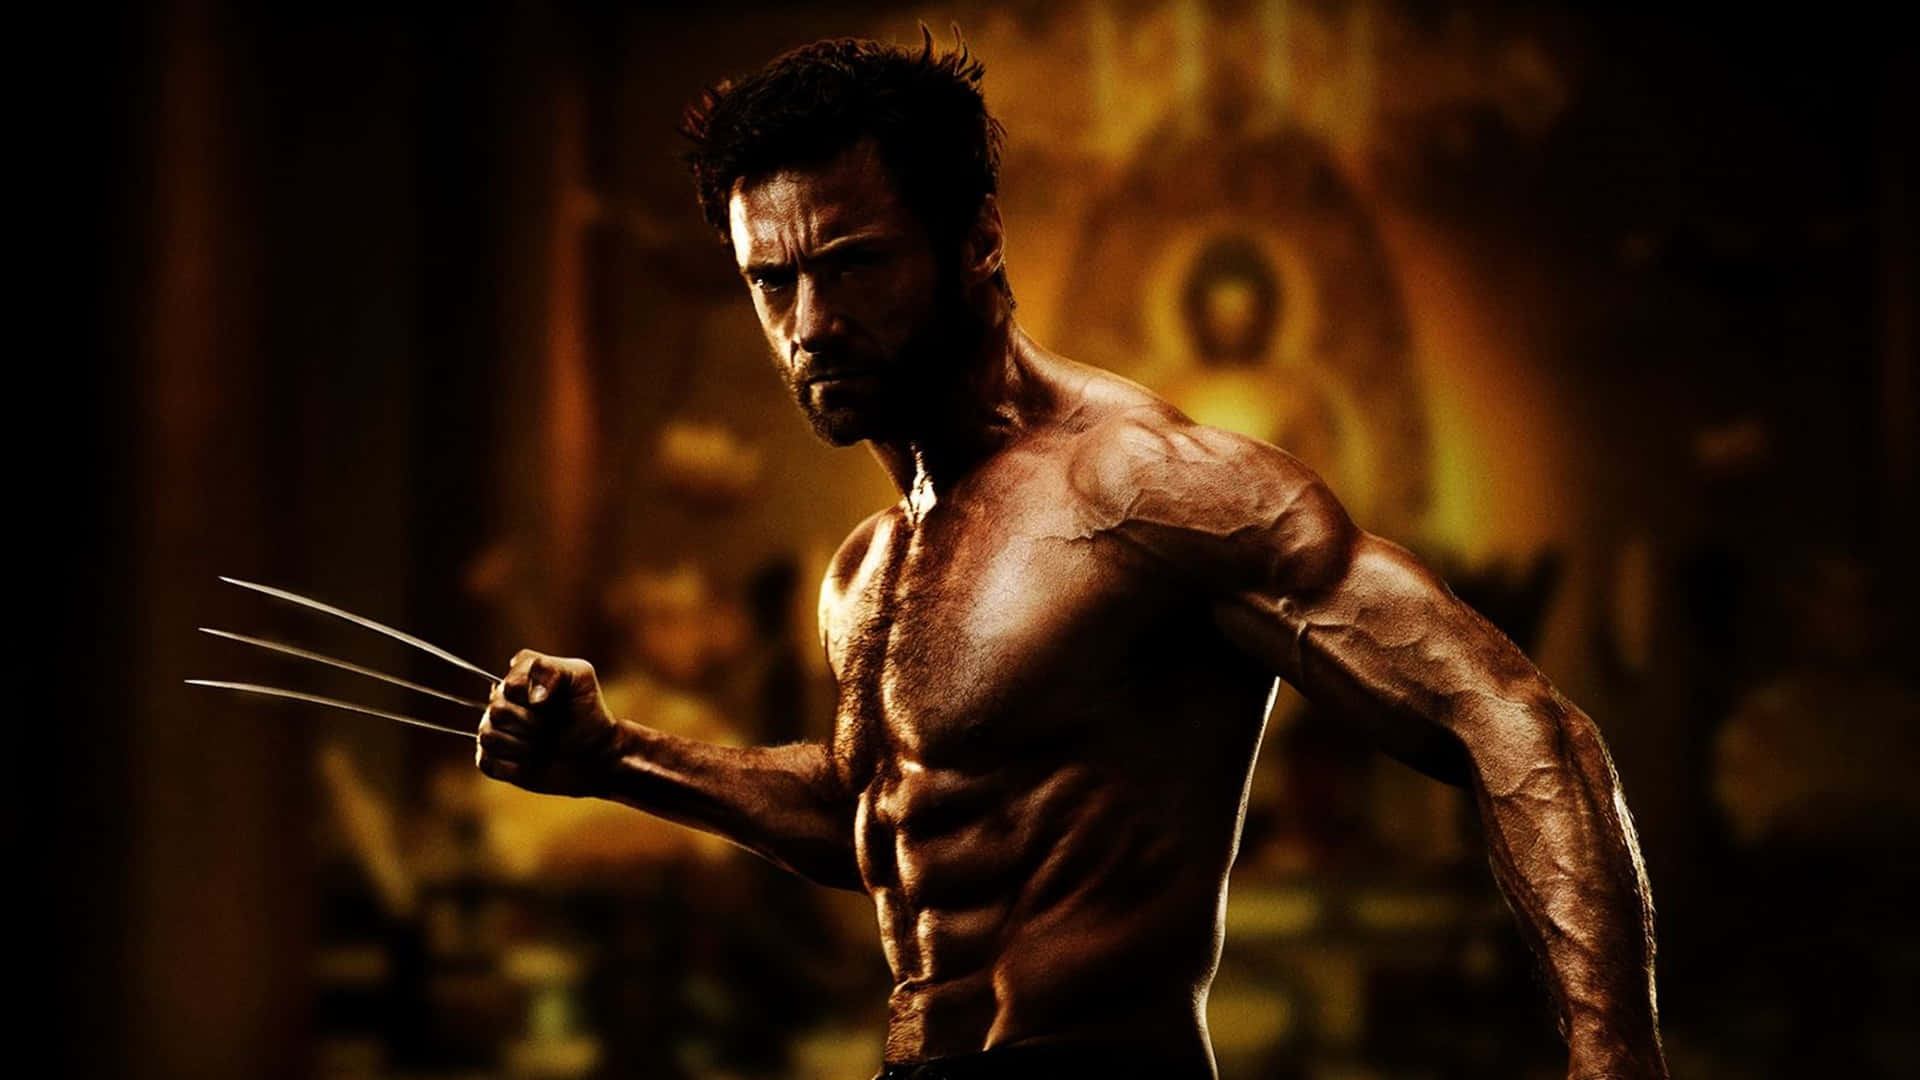 Wolverine, The Superhero Mutant With Adamantium Claws